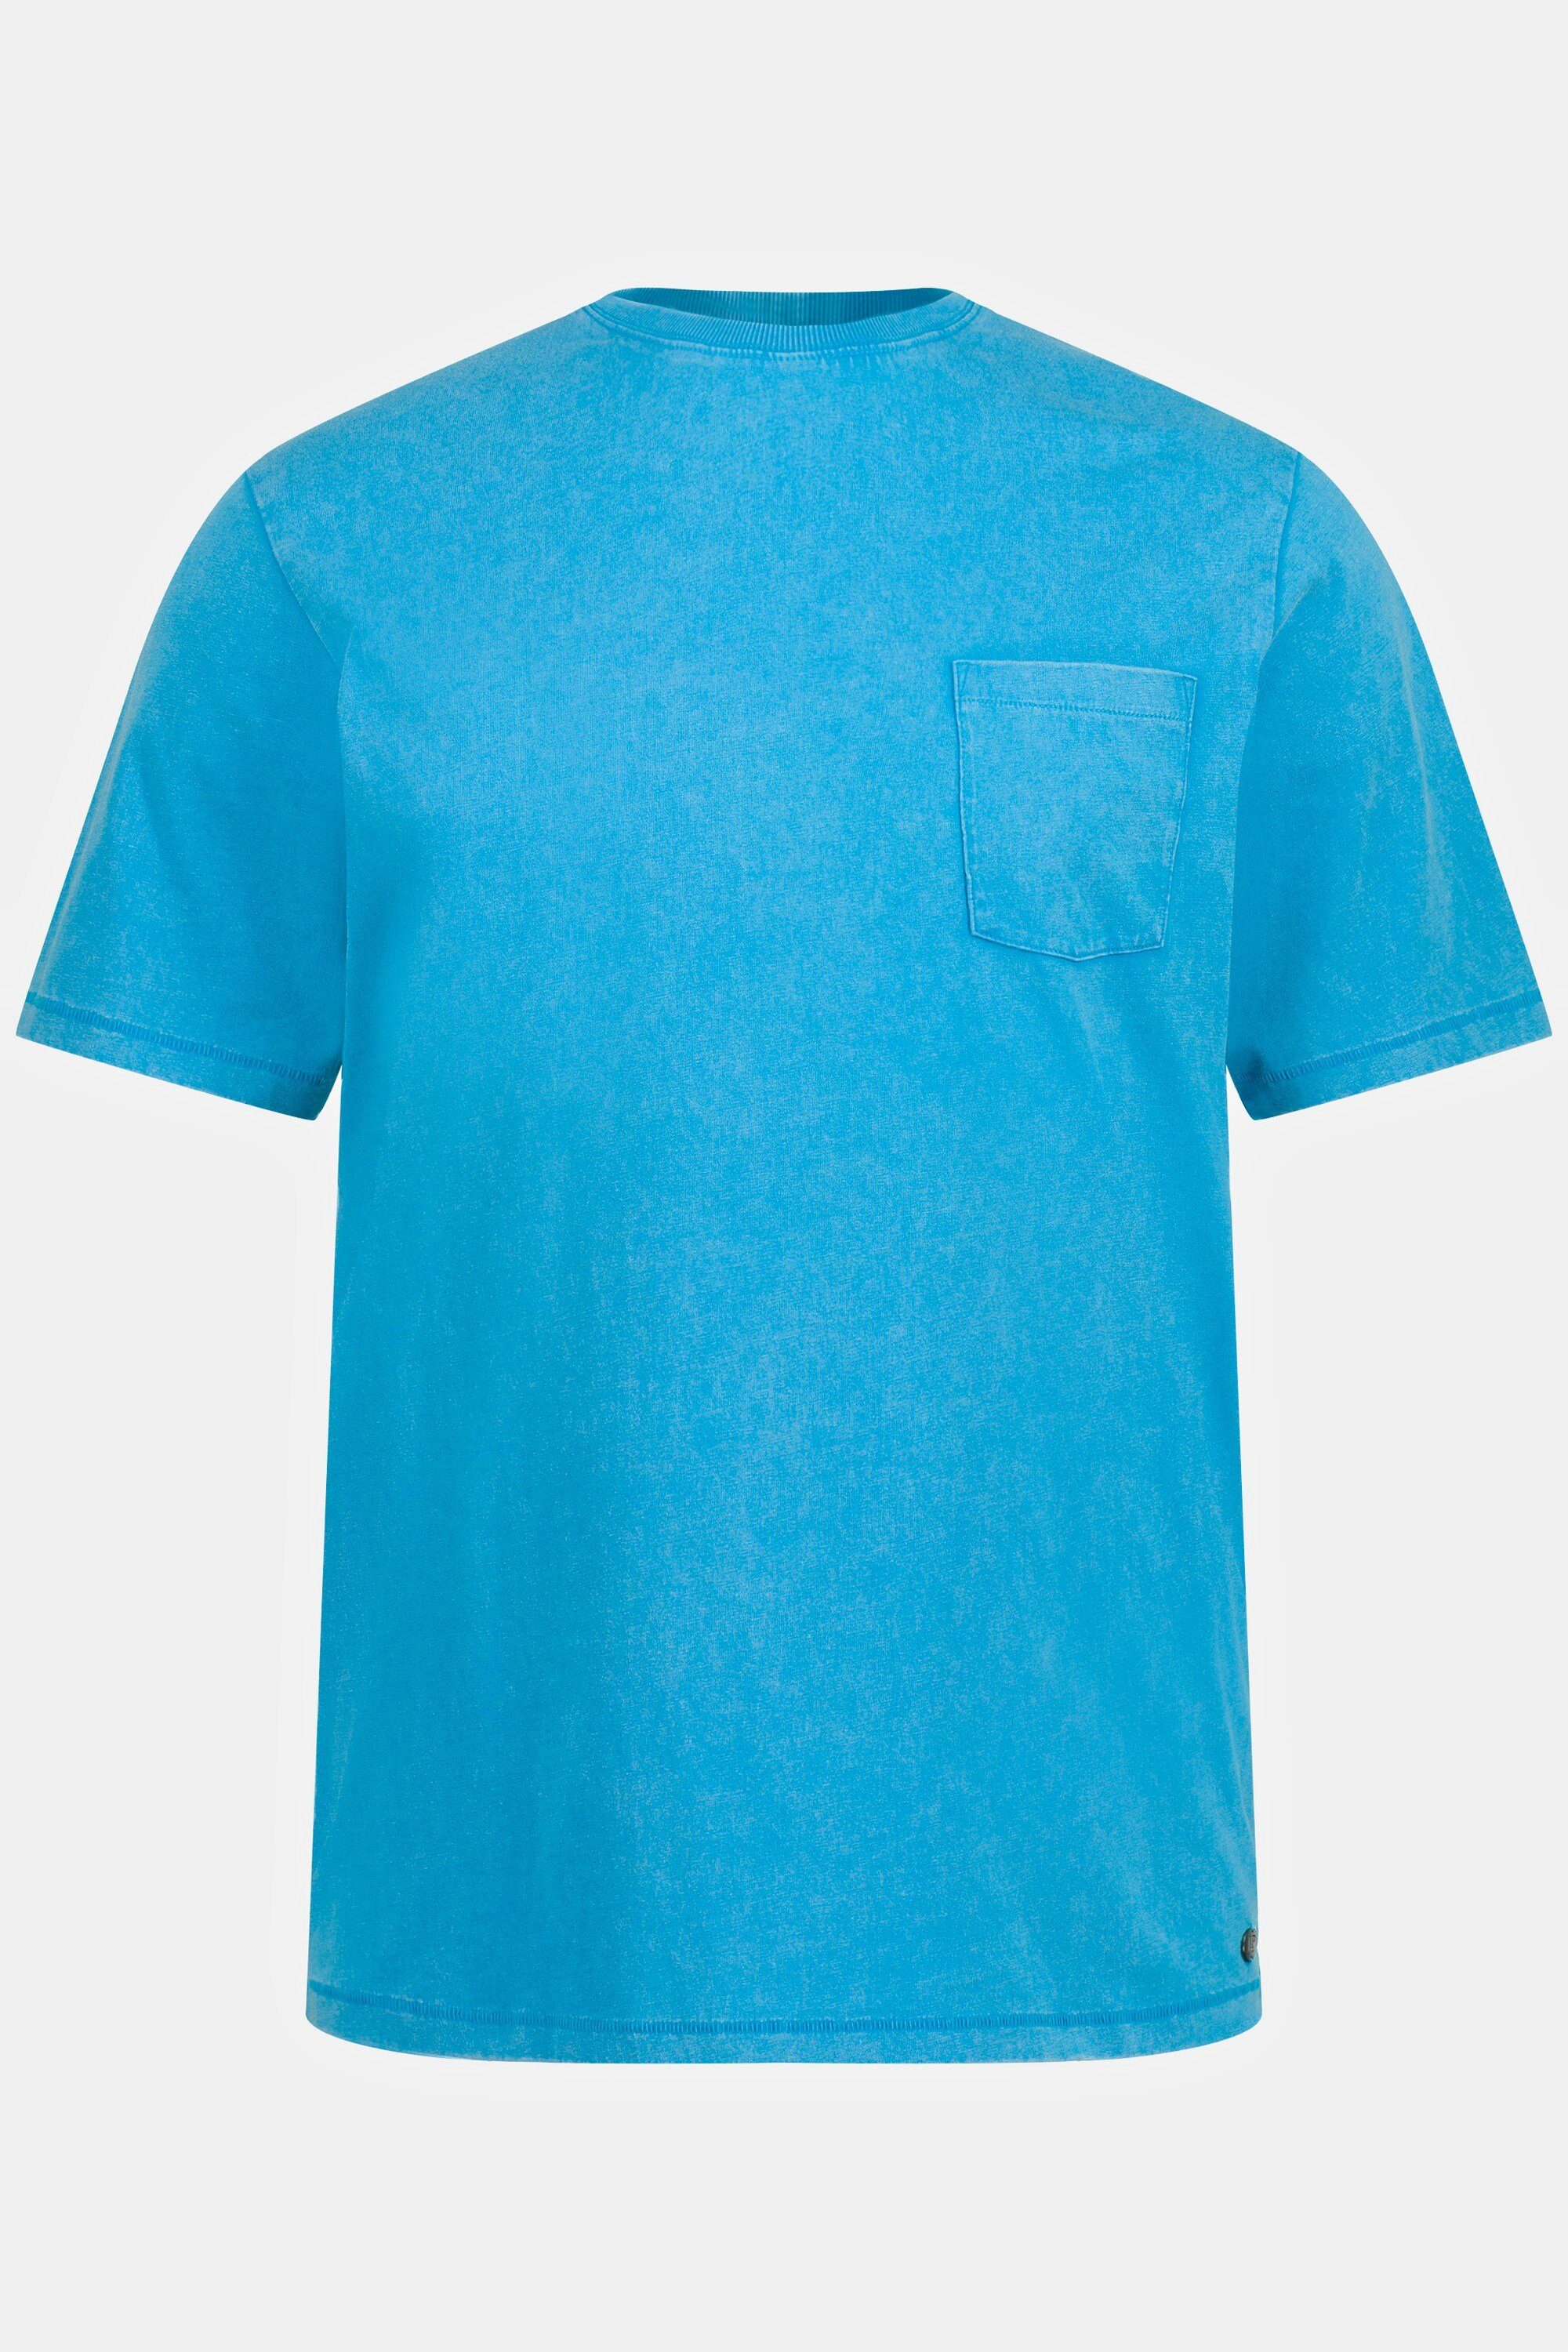 JP1880 T-Shirt T-Shirt Flammjersey acid aquamarin washed Biobaumwolle